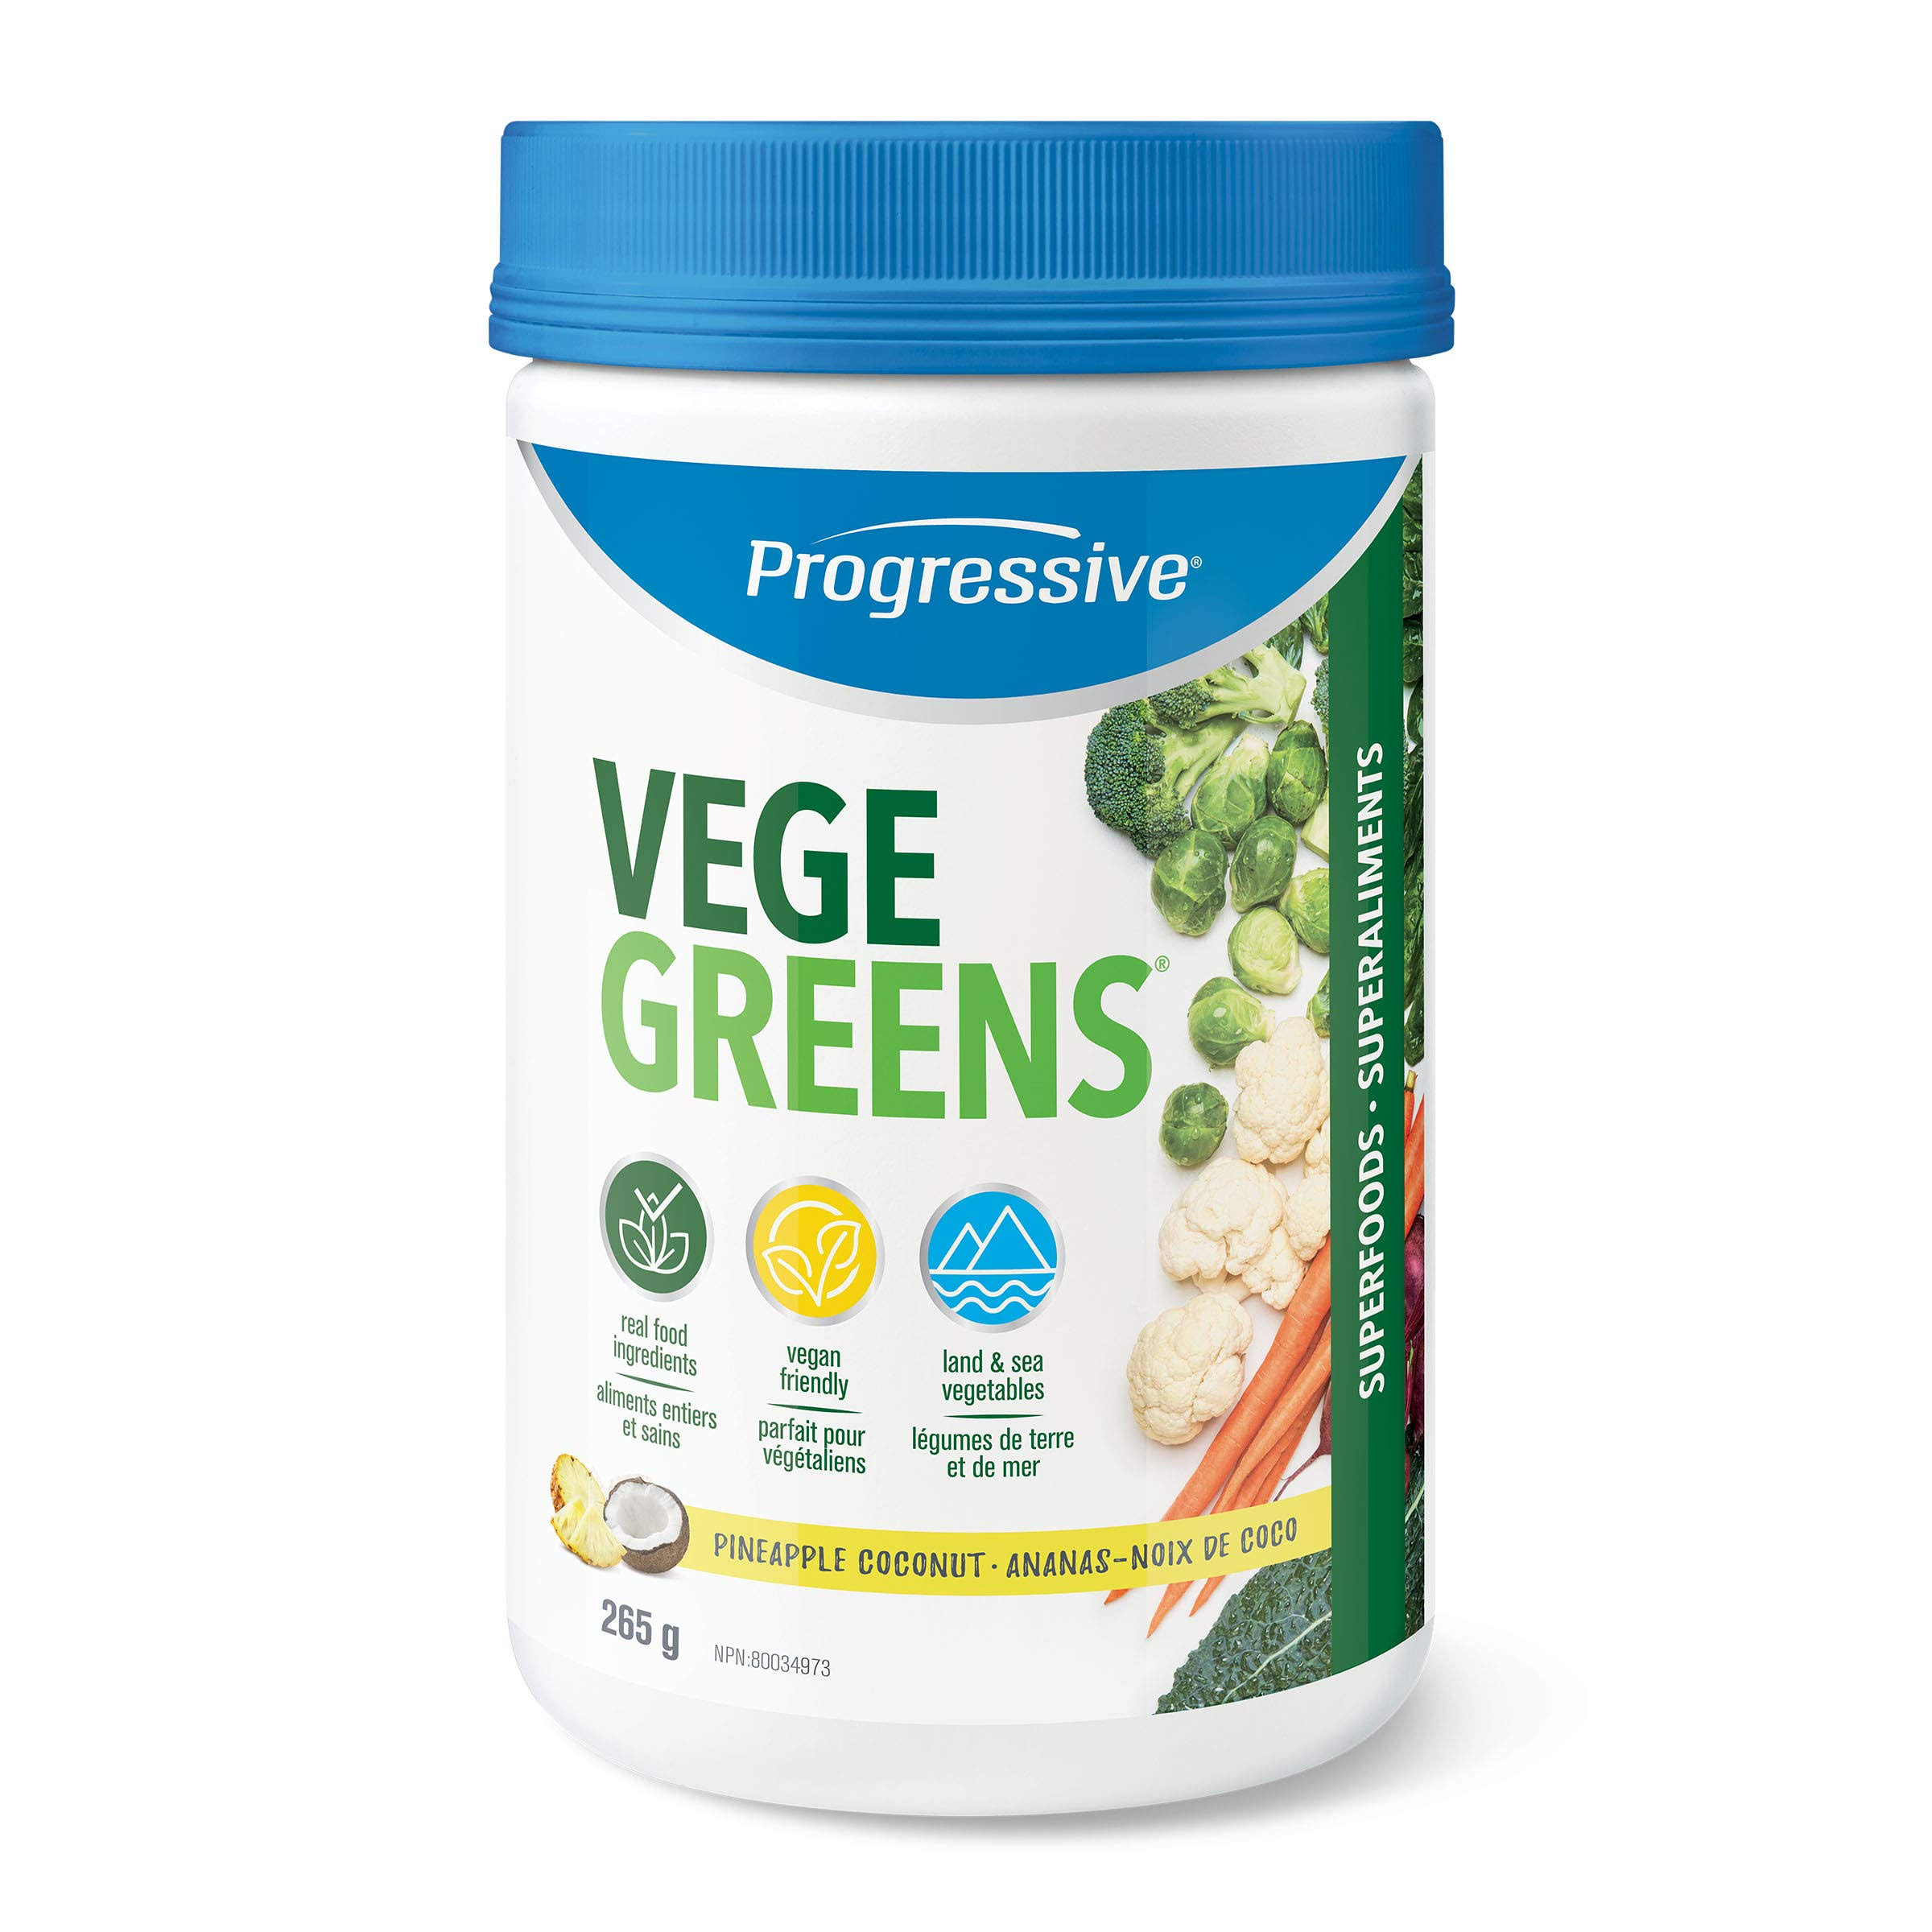 Progressive VegeGreens - Pineapple Coconut